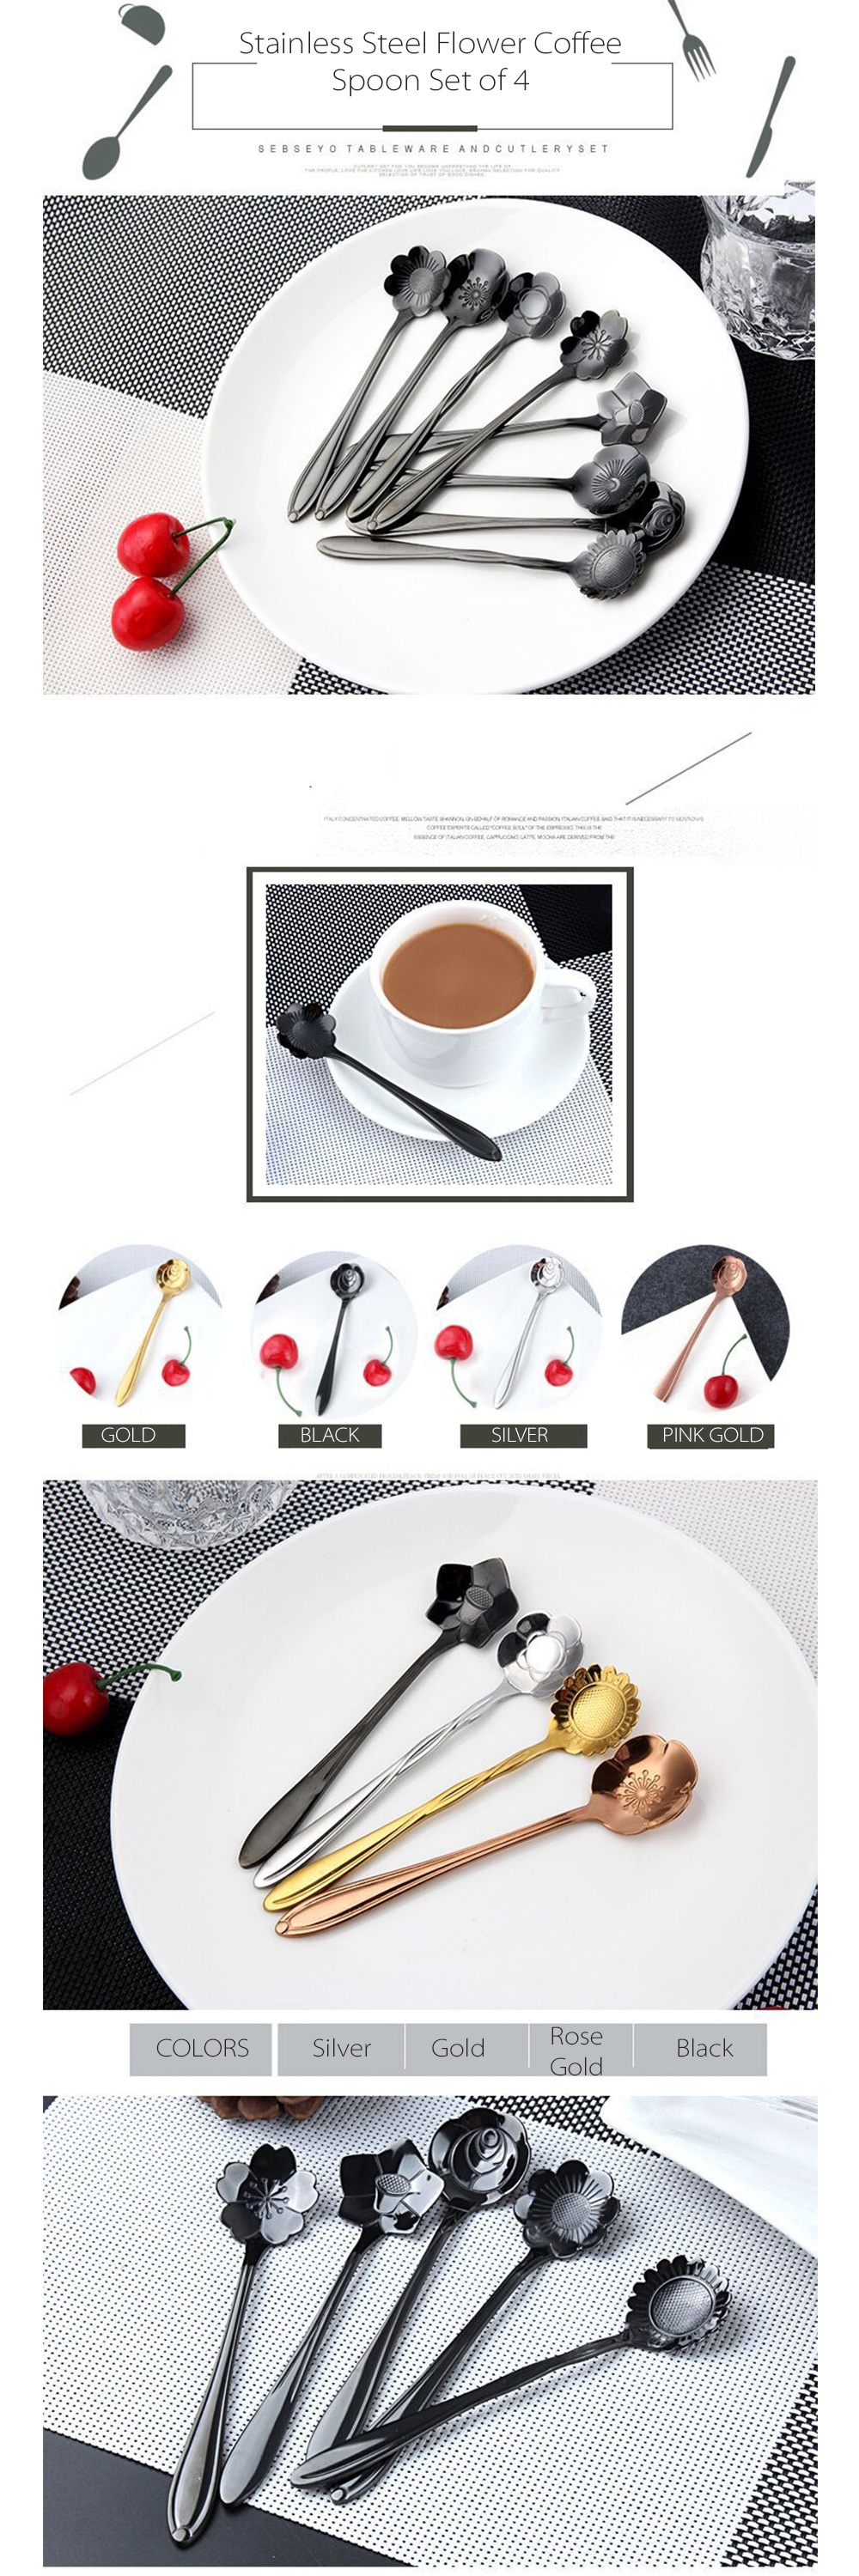 https://rs.apolloboxassets.com/images/sku1872-Stainless-Steel-Flower-Coffee-Spoon-Set-of-4/Detail_1.jpg